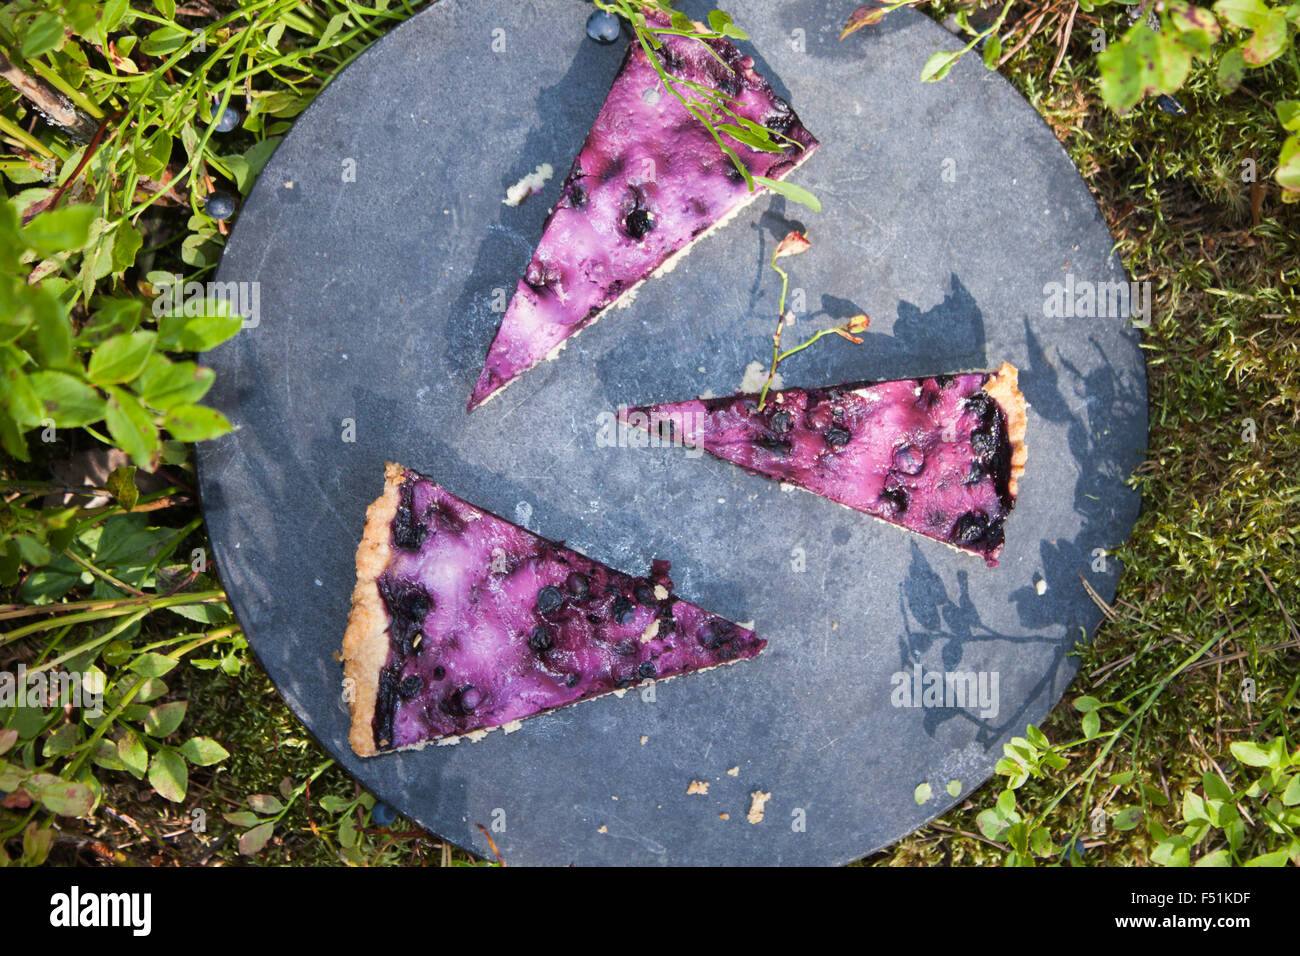 Blueberry pie pieces, near vaccinium myrtillus berries and plants Stock Photo